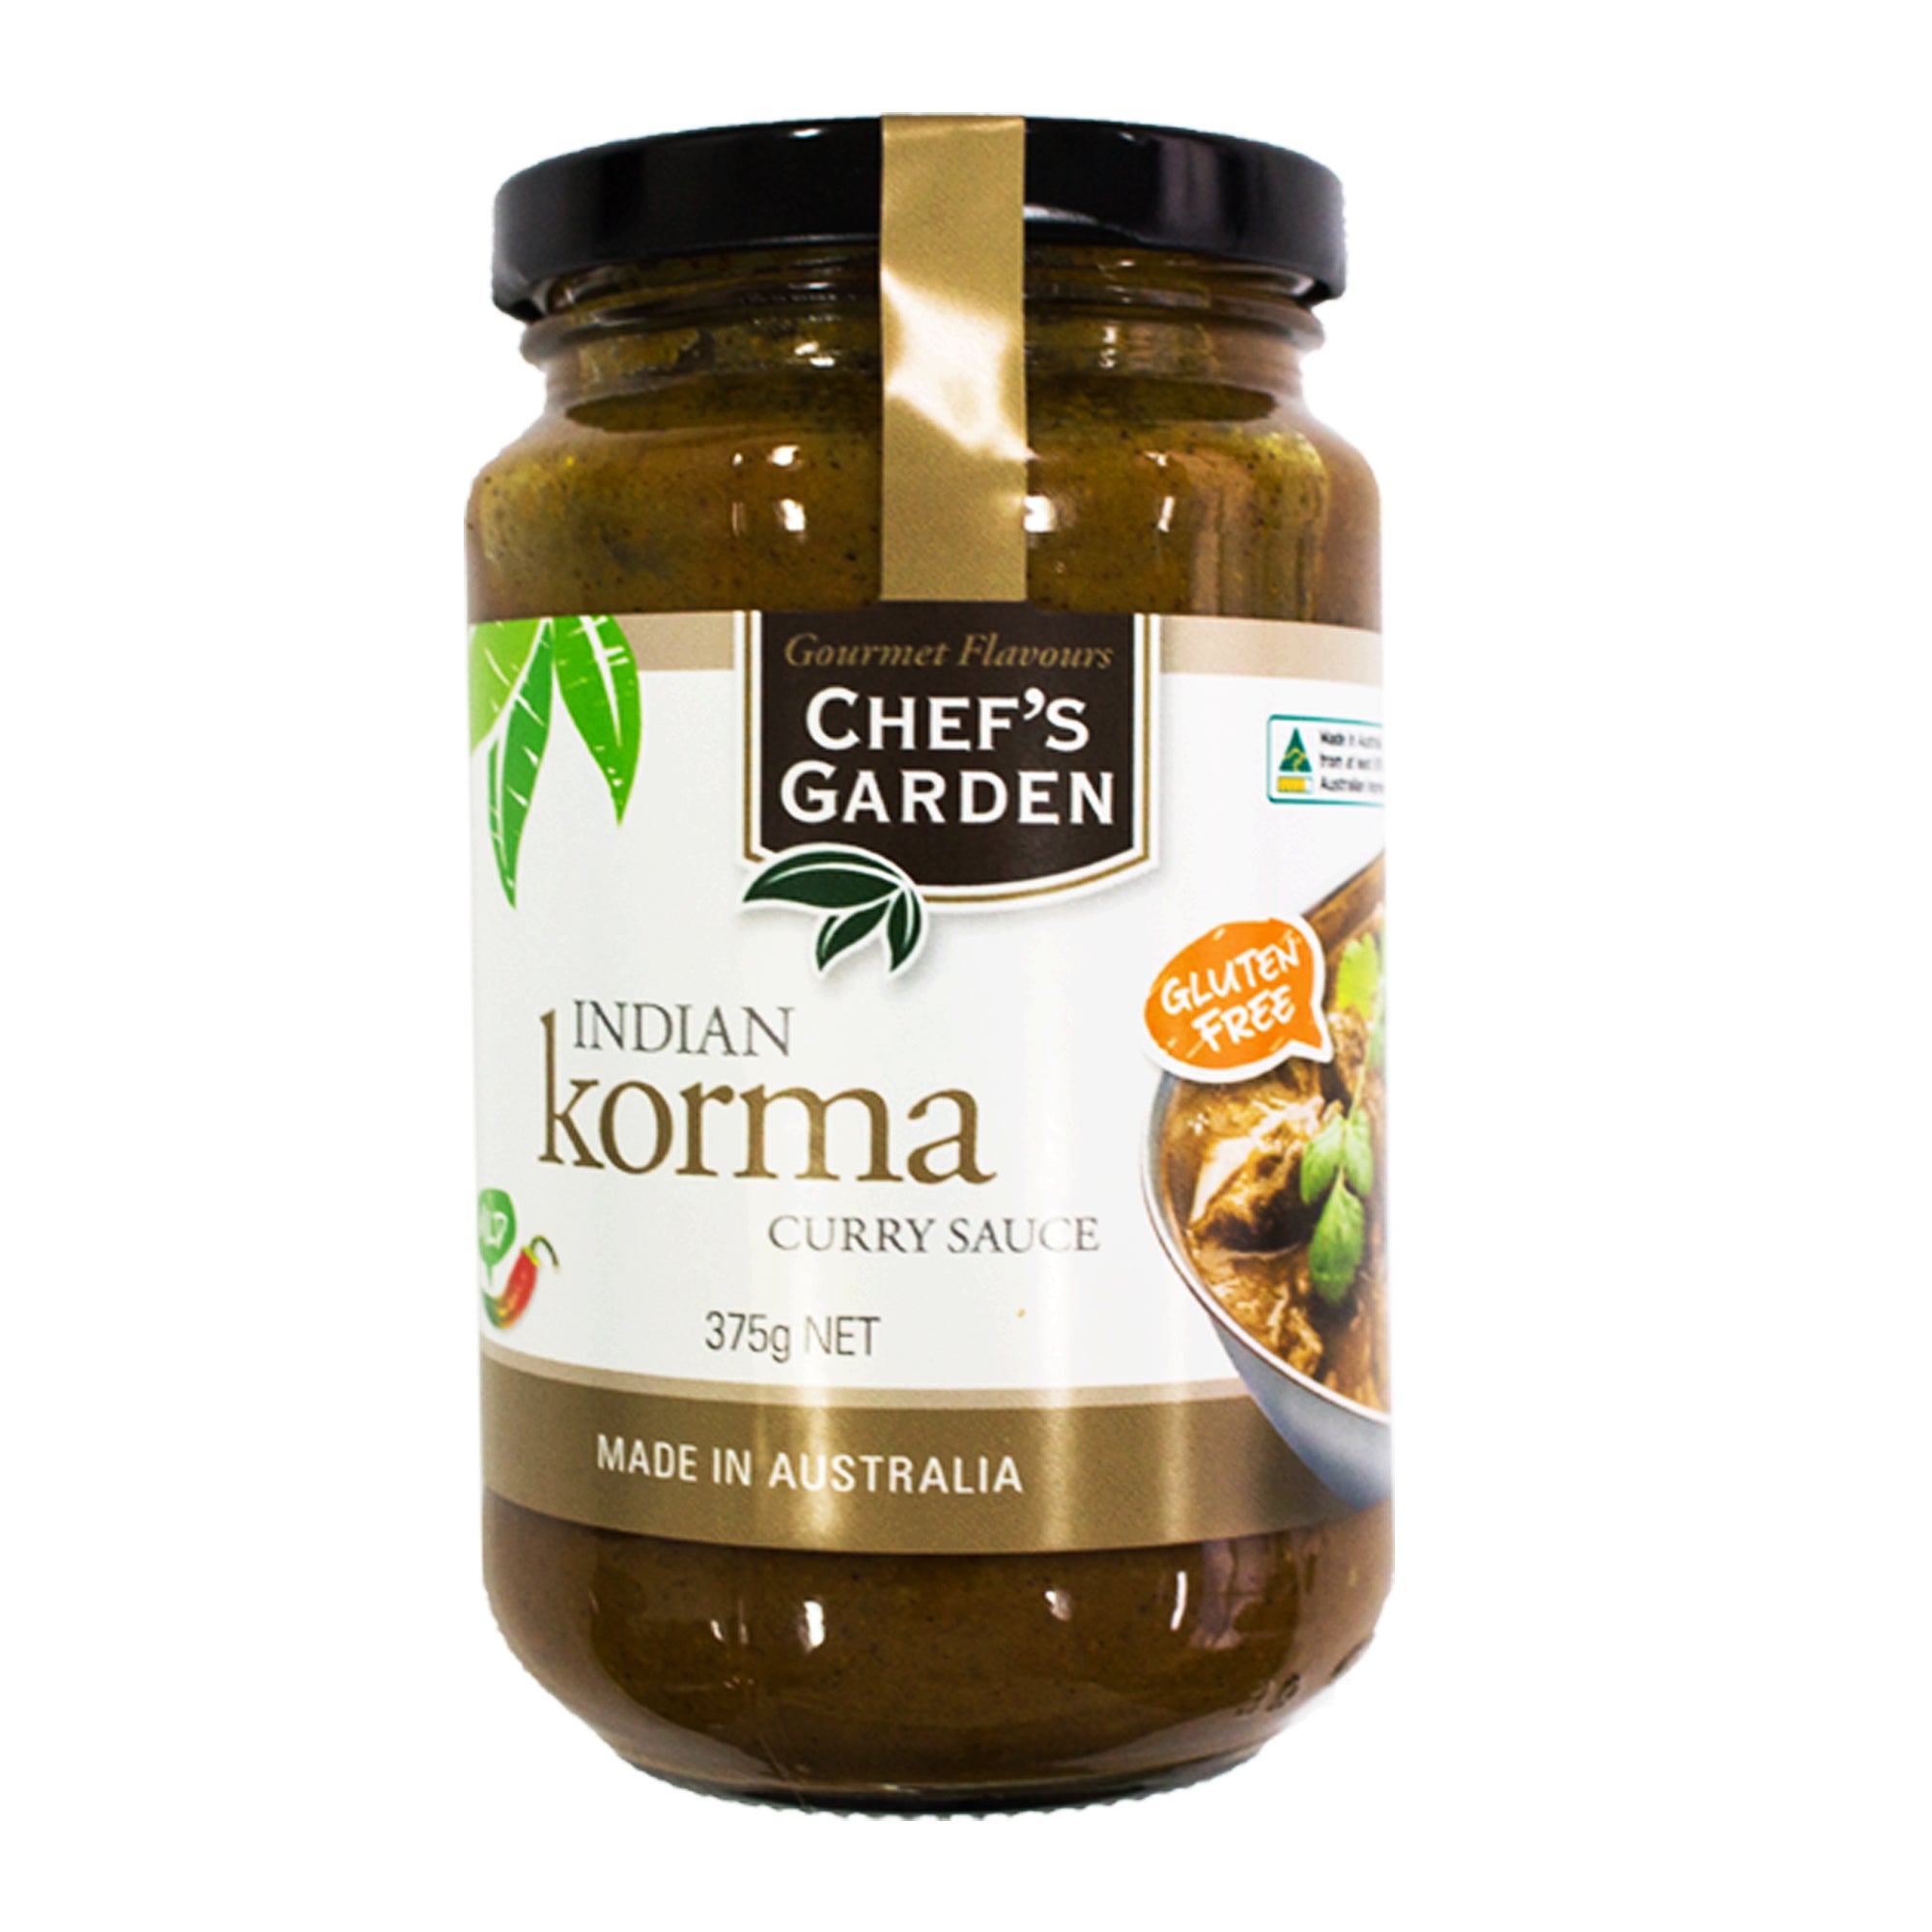 Chef's Garden Indian Korma Curry Sauce 375g